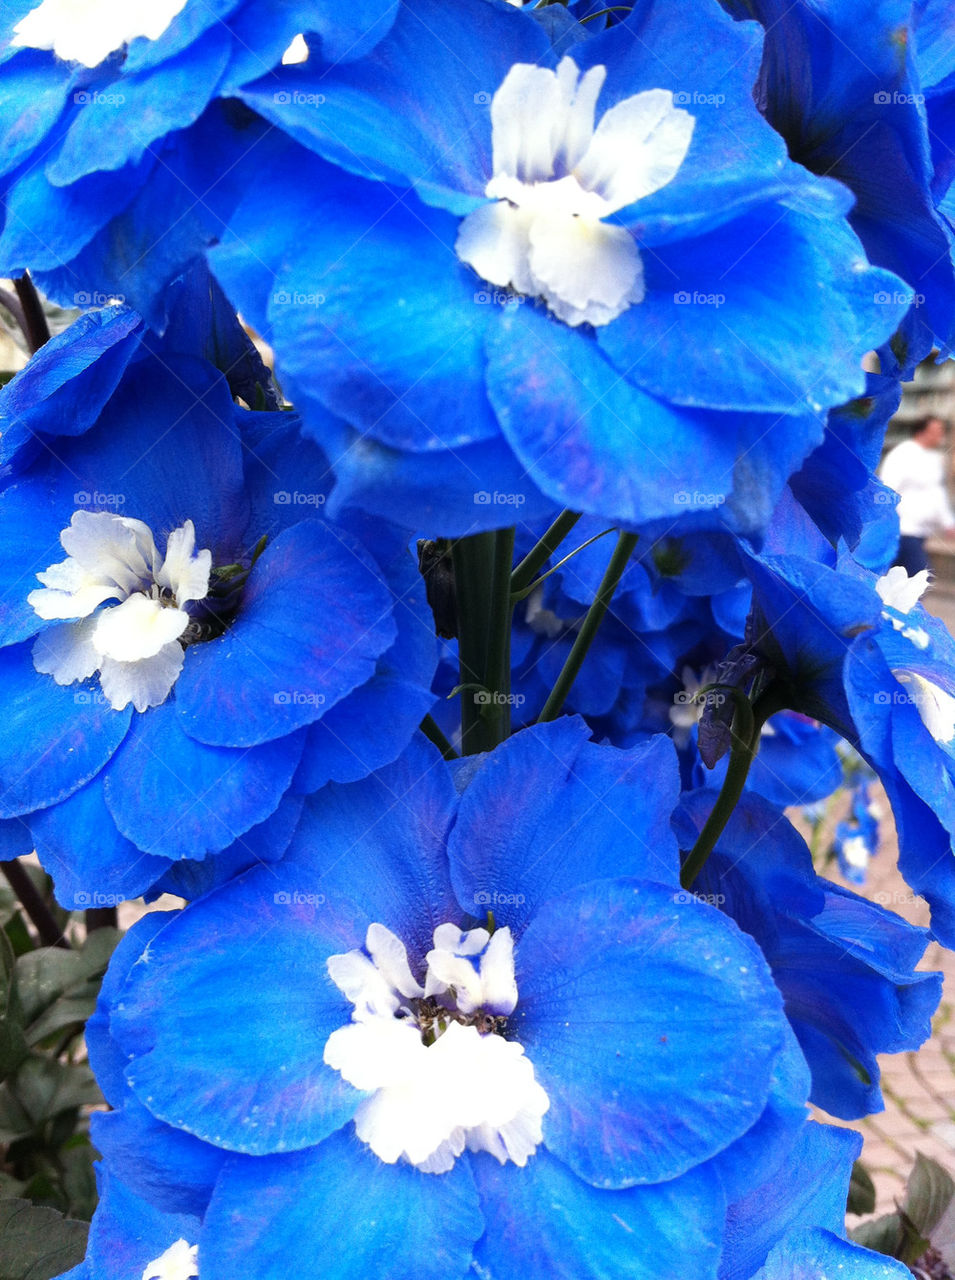 city flower blue white by joadams